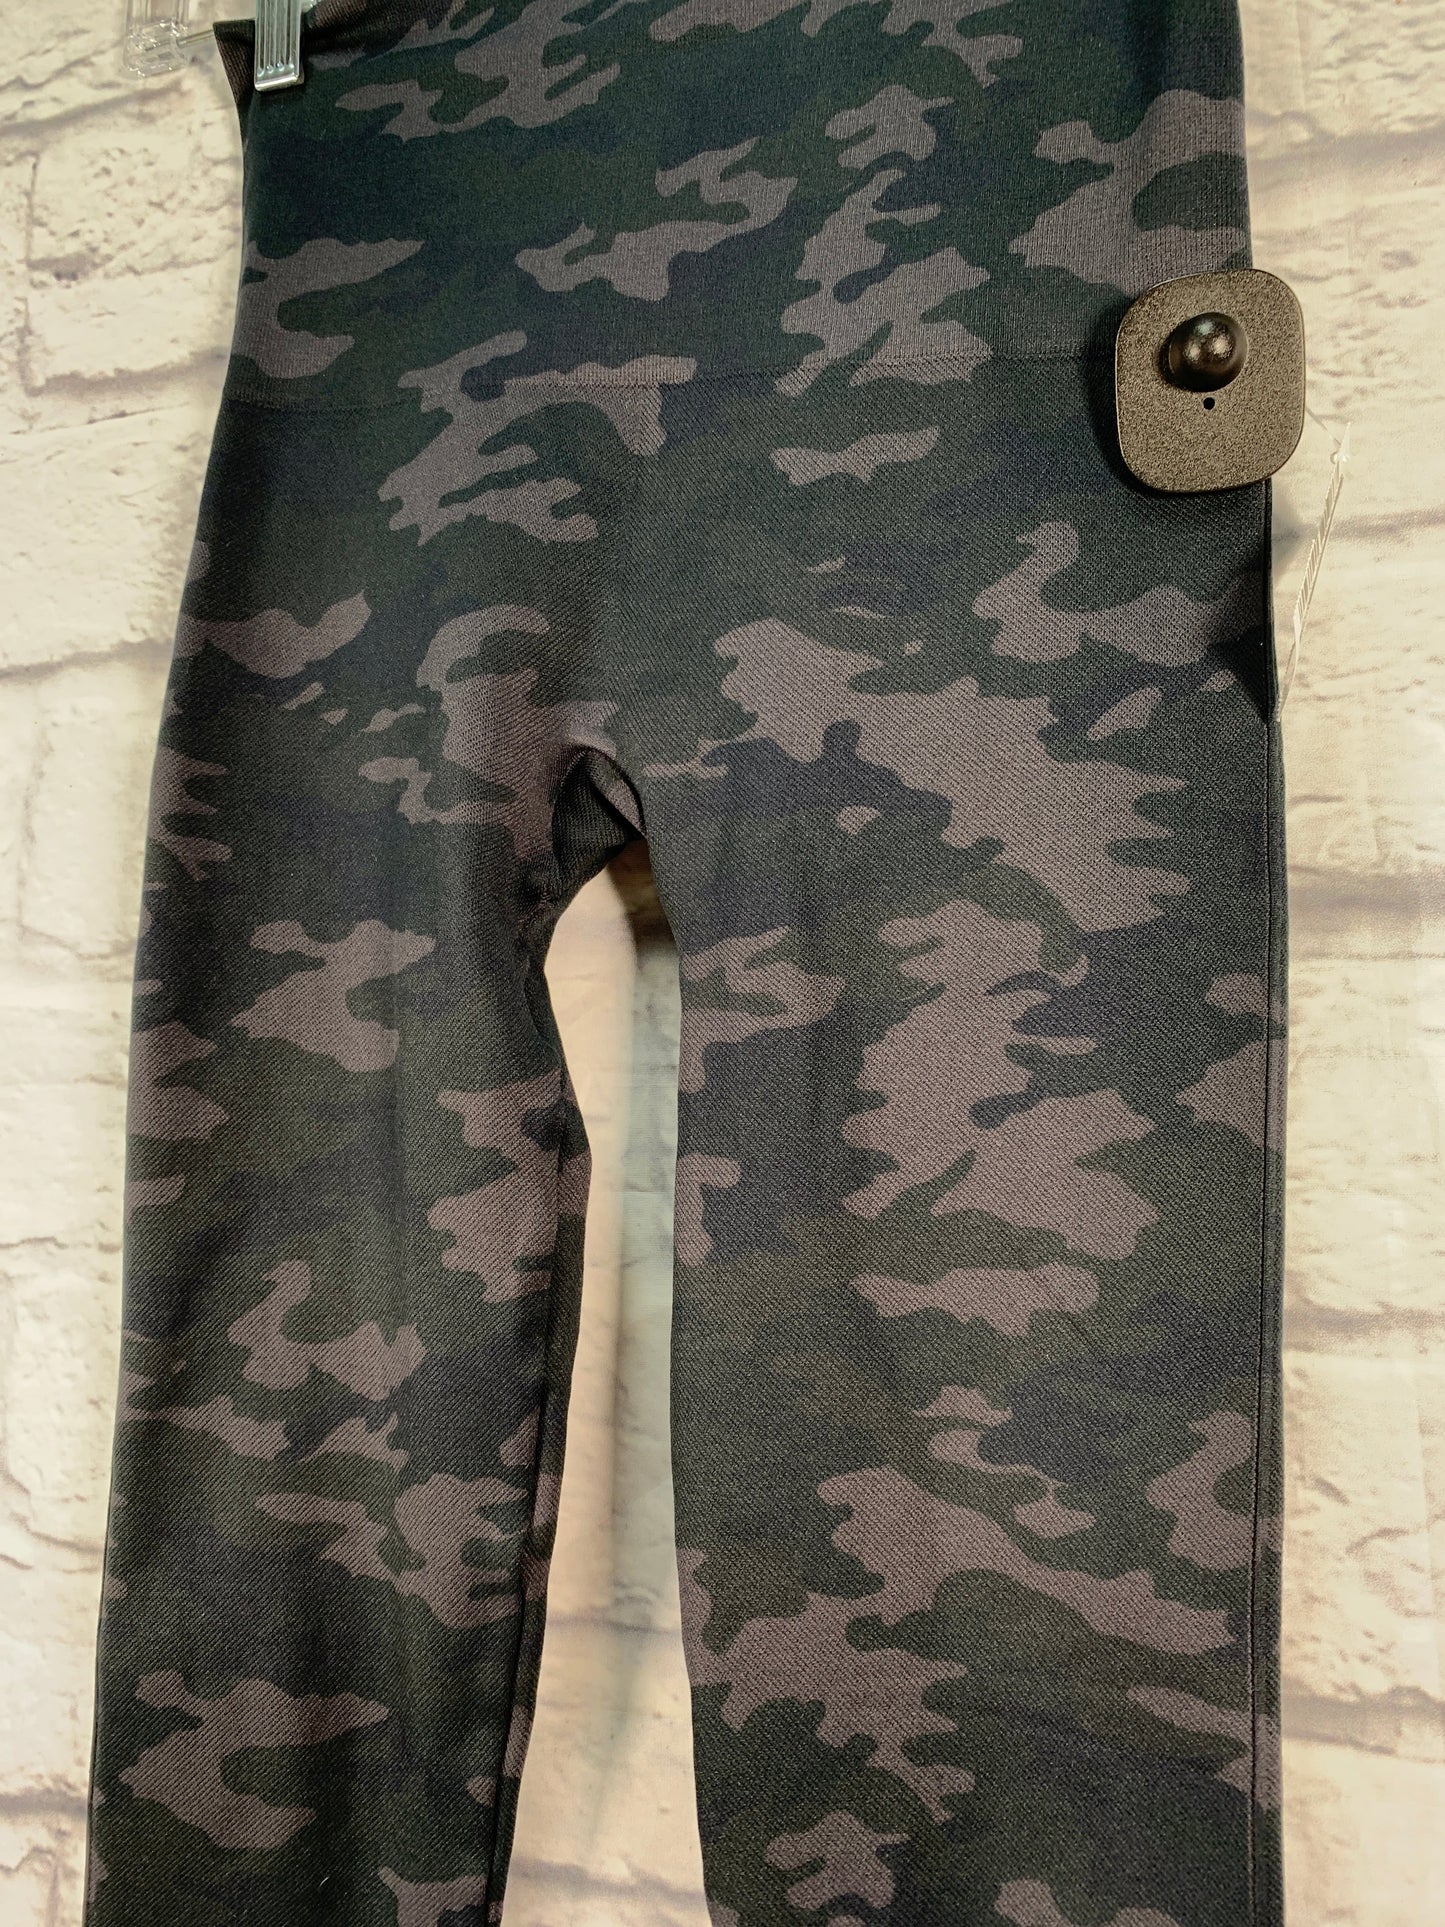 Camouflage Print Pants Leggings Spanx, Size 8